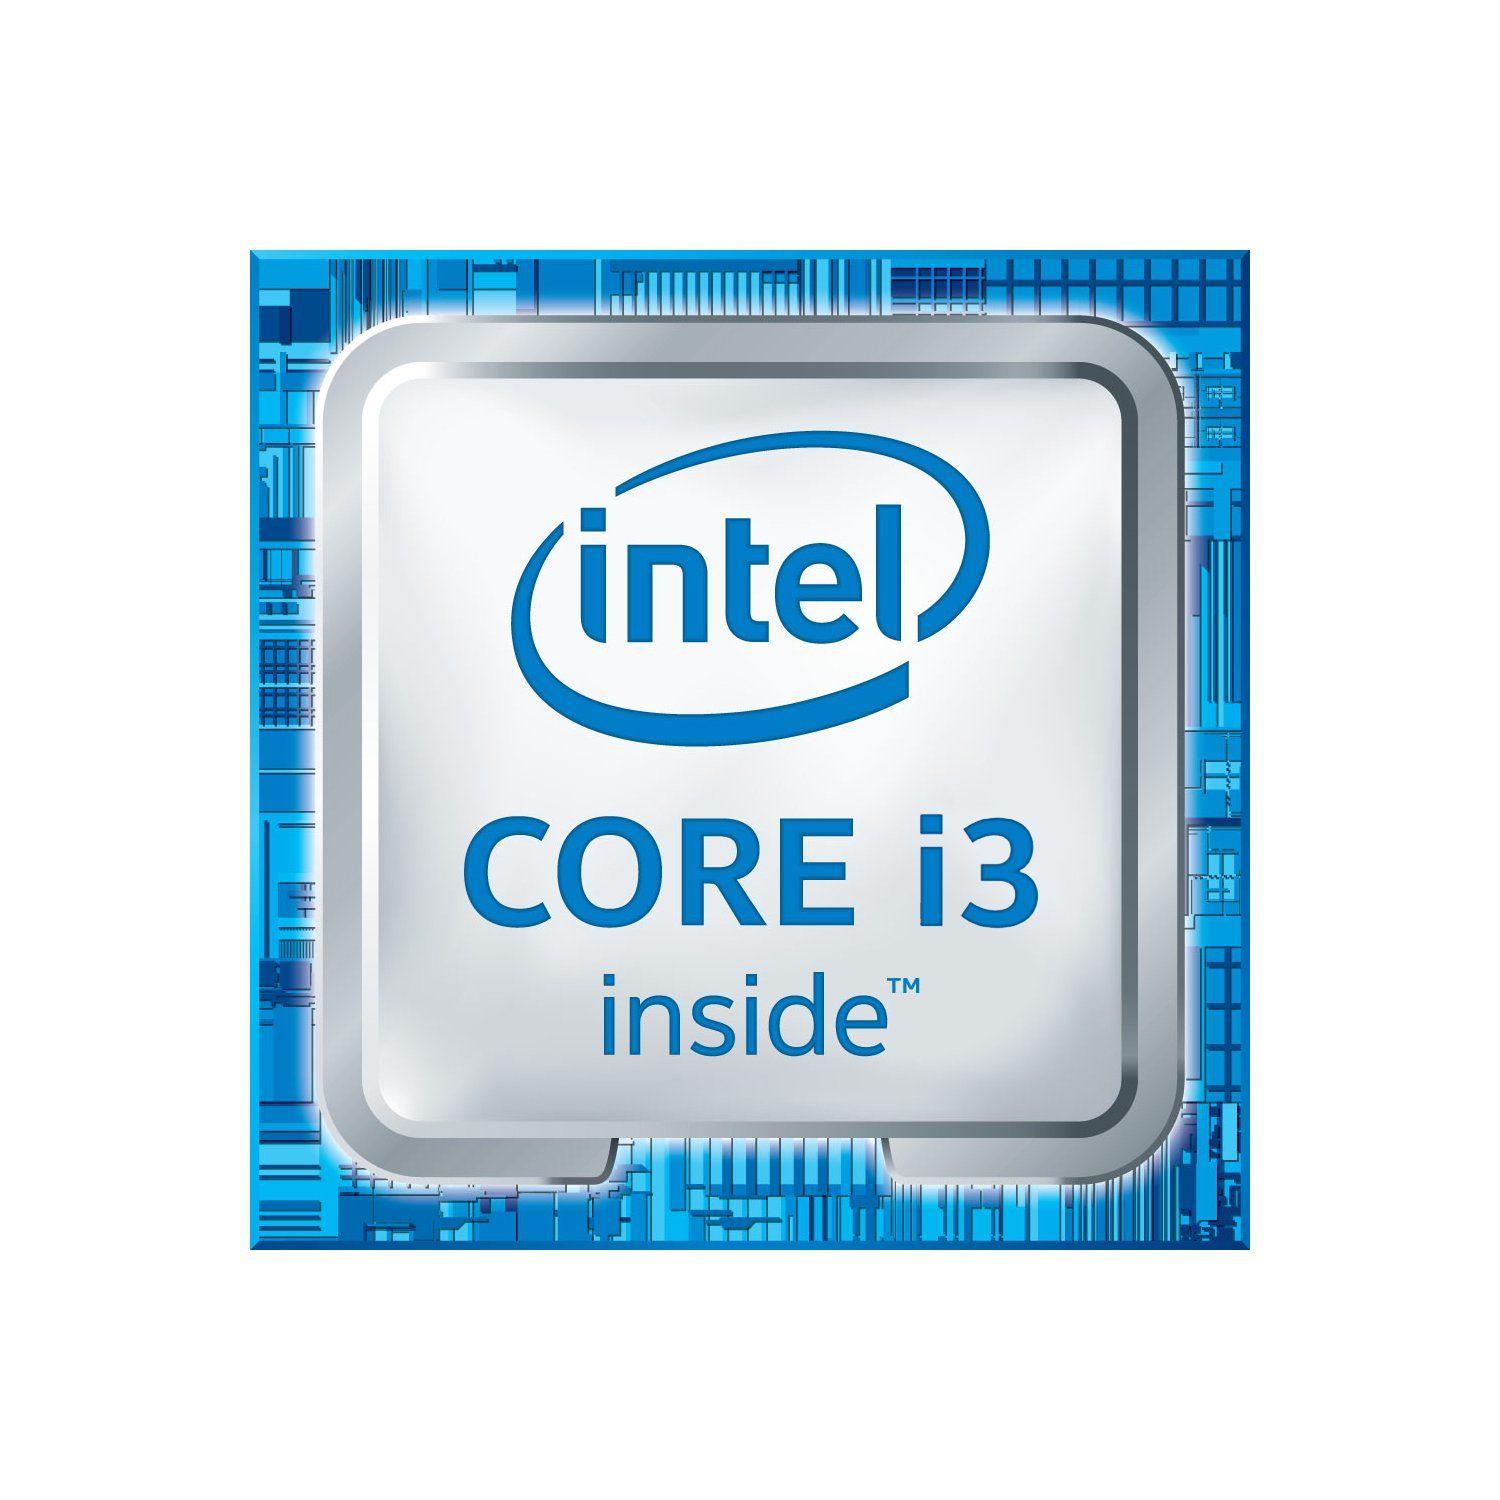 Original Intel Logo - Amazon.com: 5x Original 6th Gen. Intel Core i3 Inside Sticker 18mm x ...